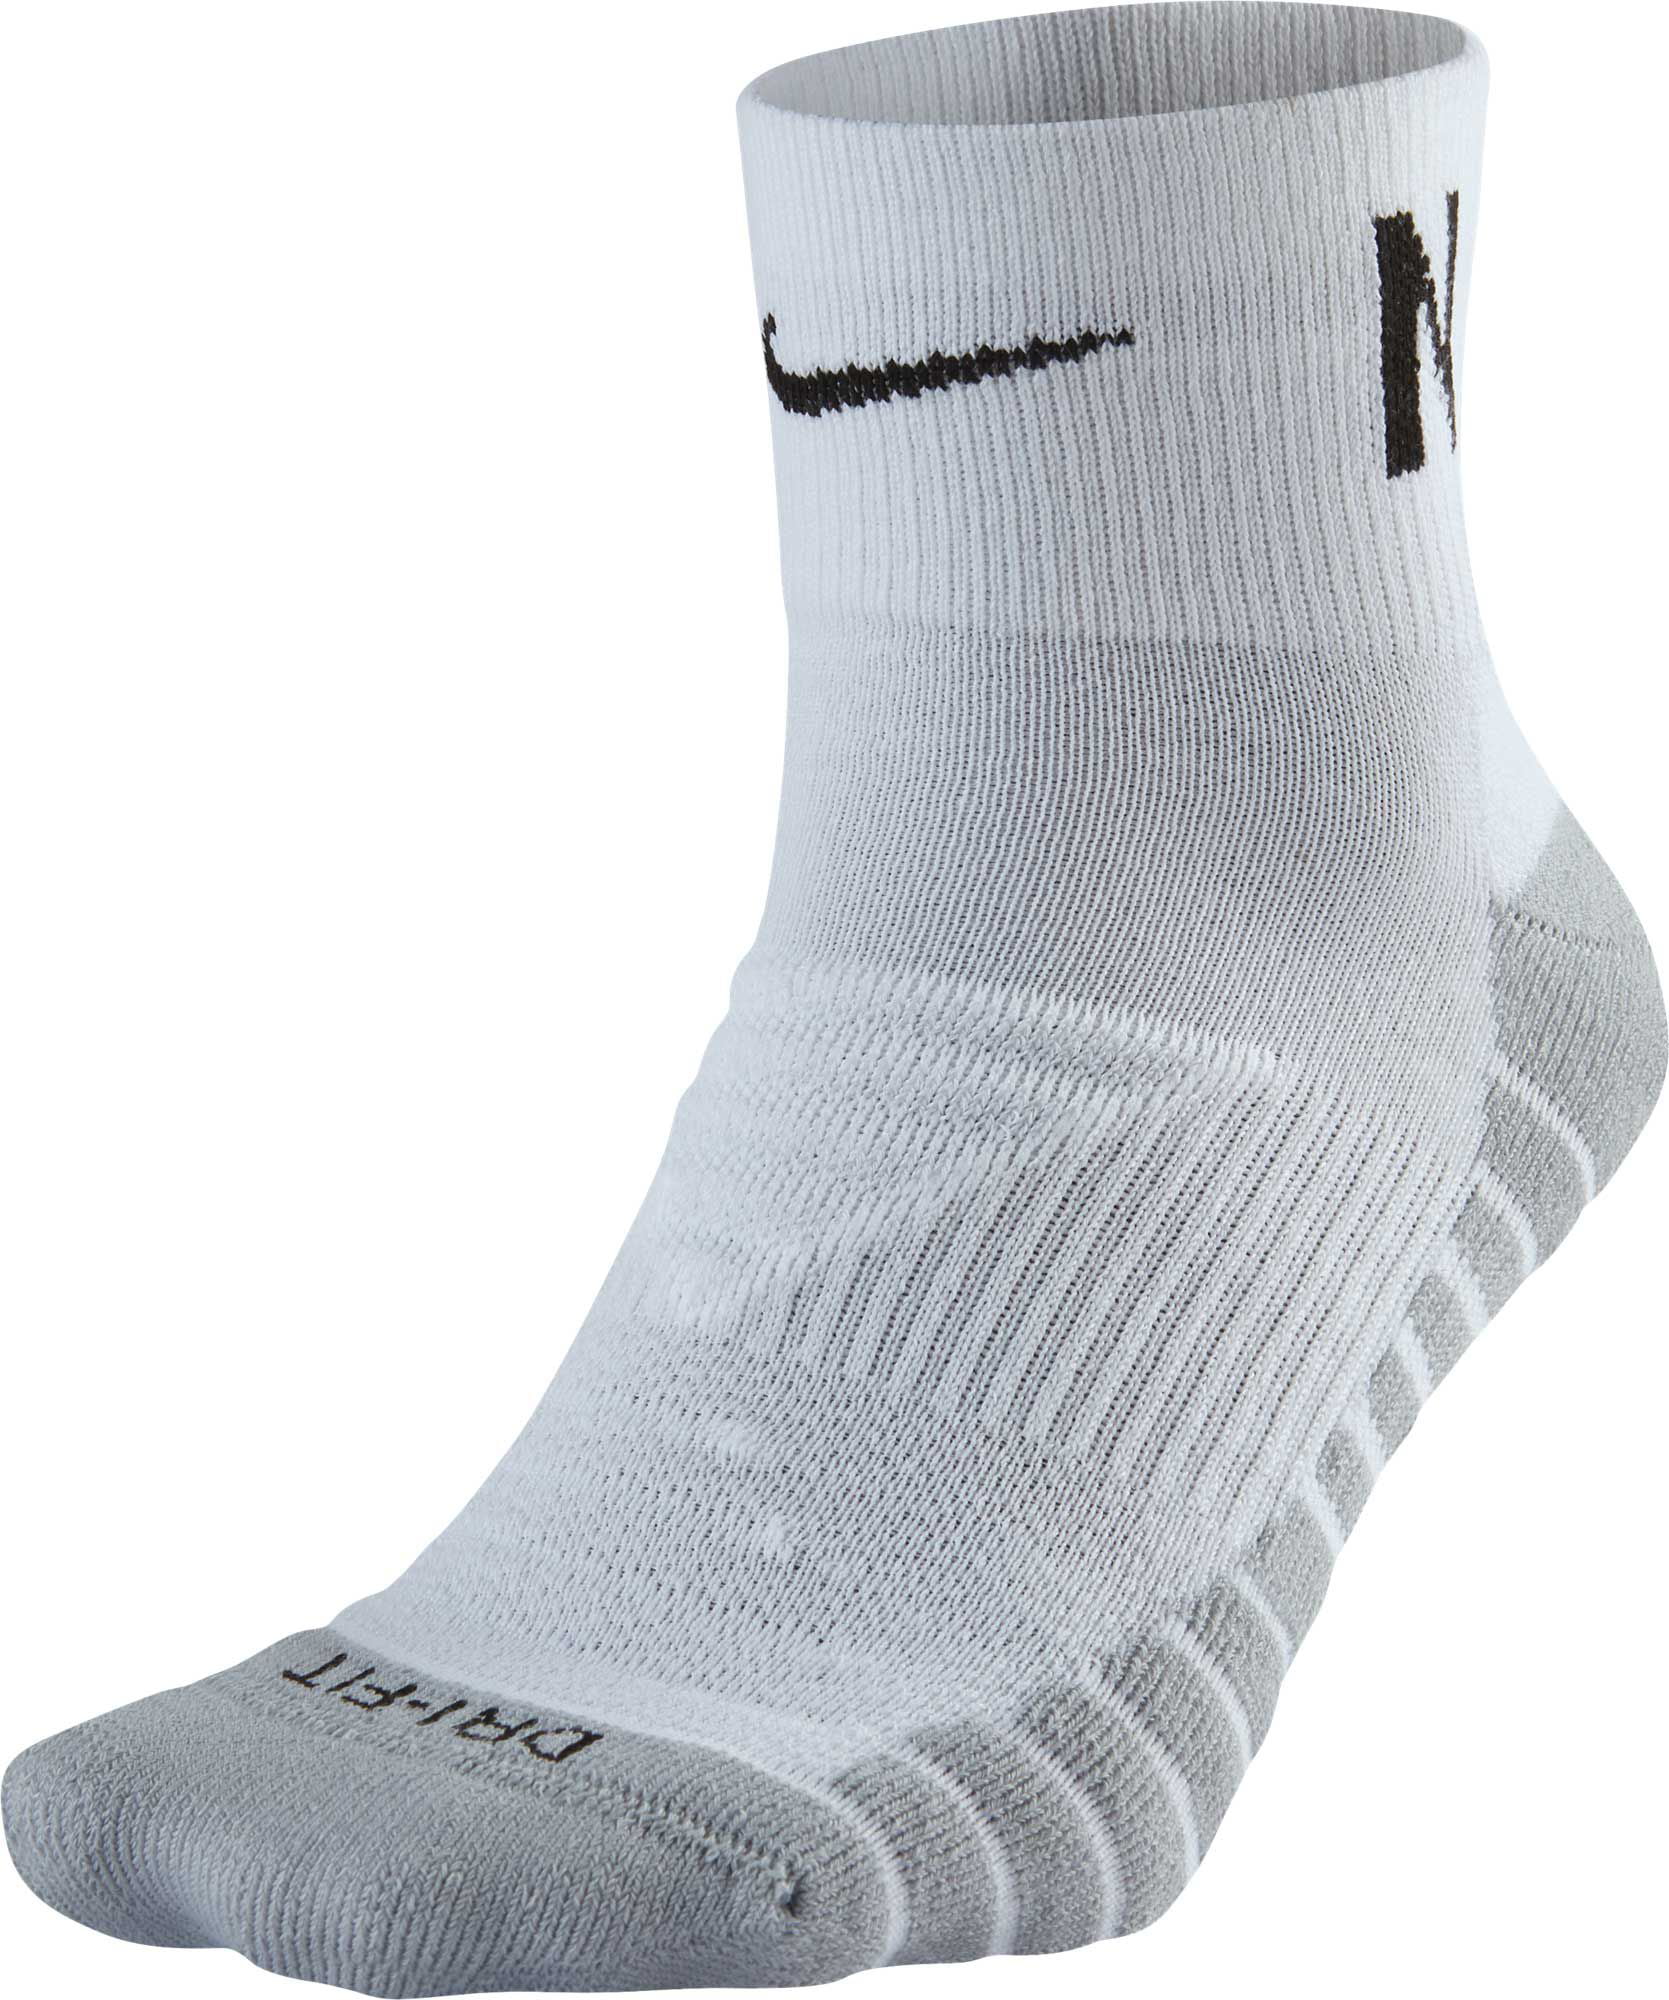 Nike - Nike Men's Dri-FIT Cushioned Ankle Golf Socks - Walmart.com ...